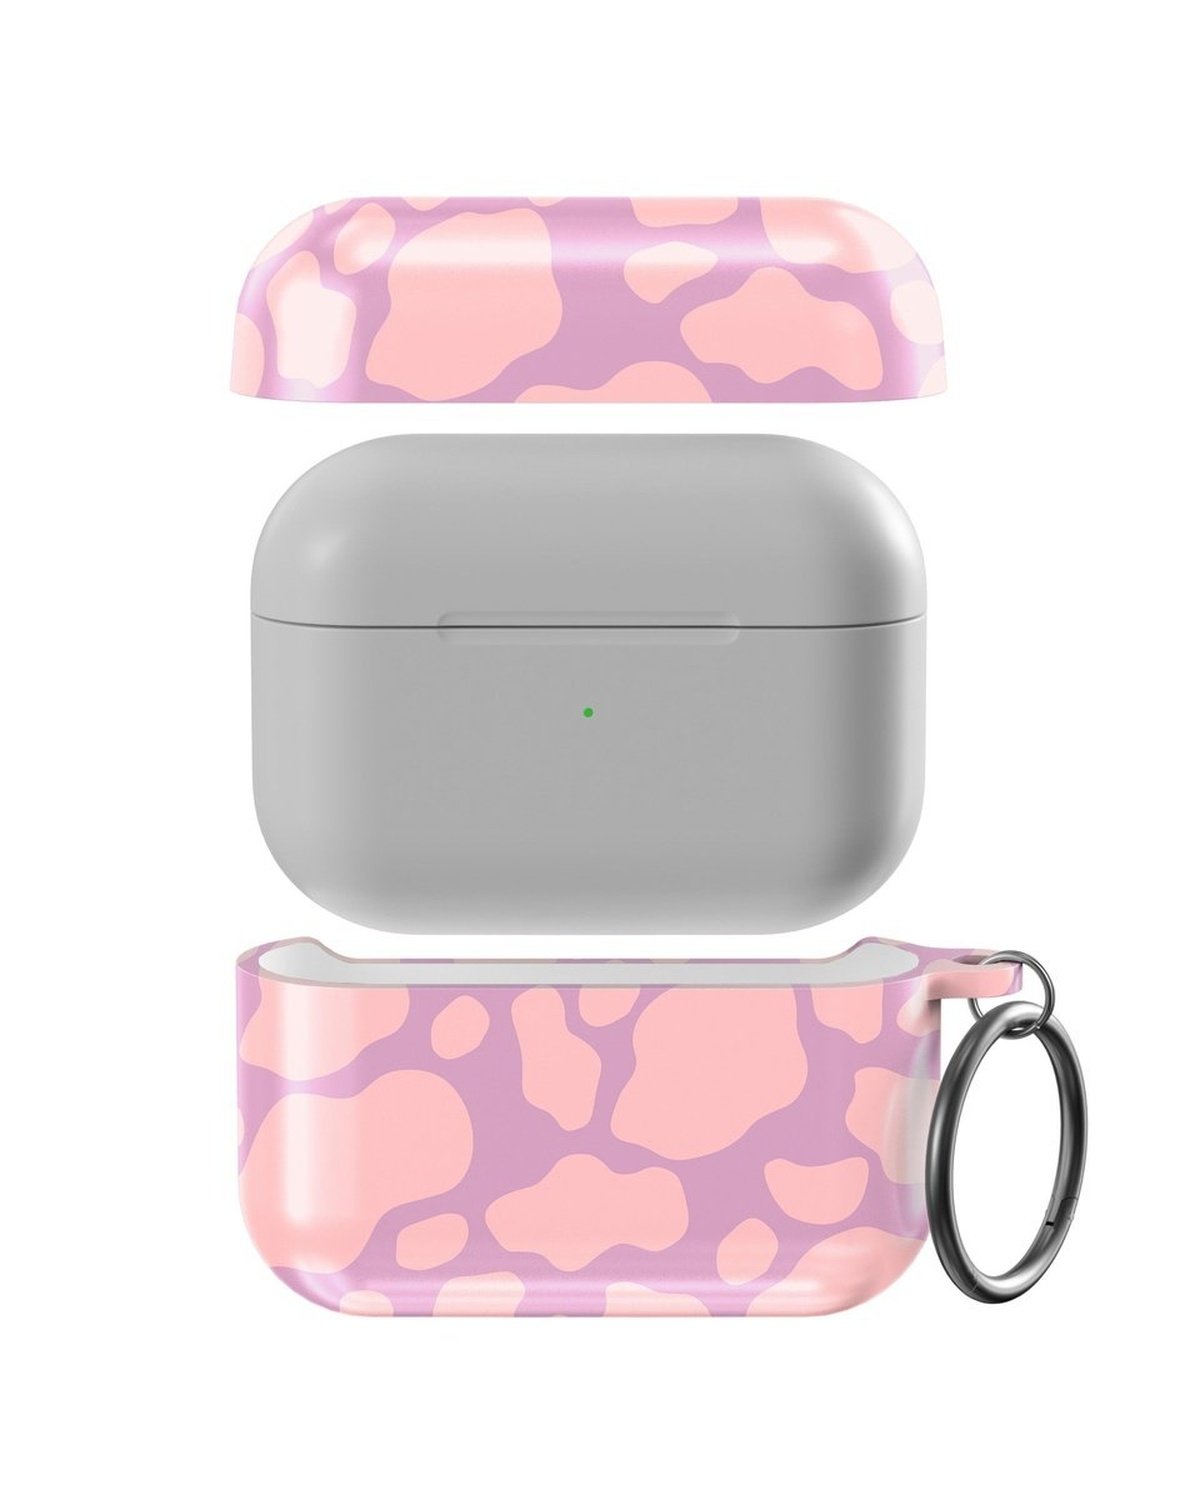 Raspberry Cookie Cream Wave - Airpod Case-Pie Cake Airpod Cases-Tousphone-Airpod Pro 1&2-Tousphone